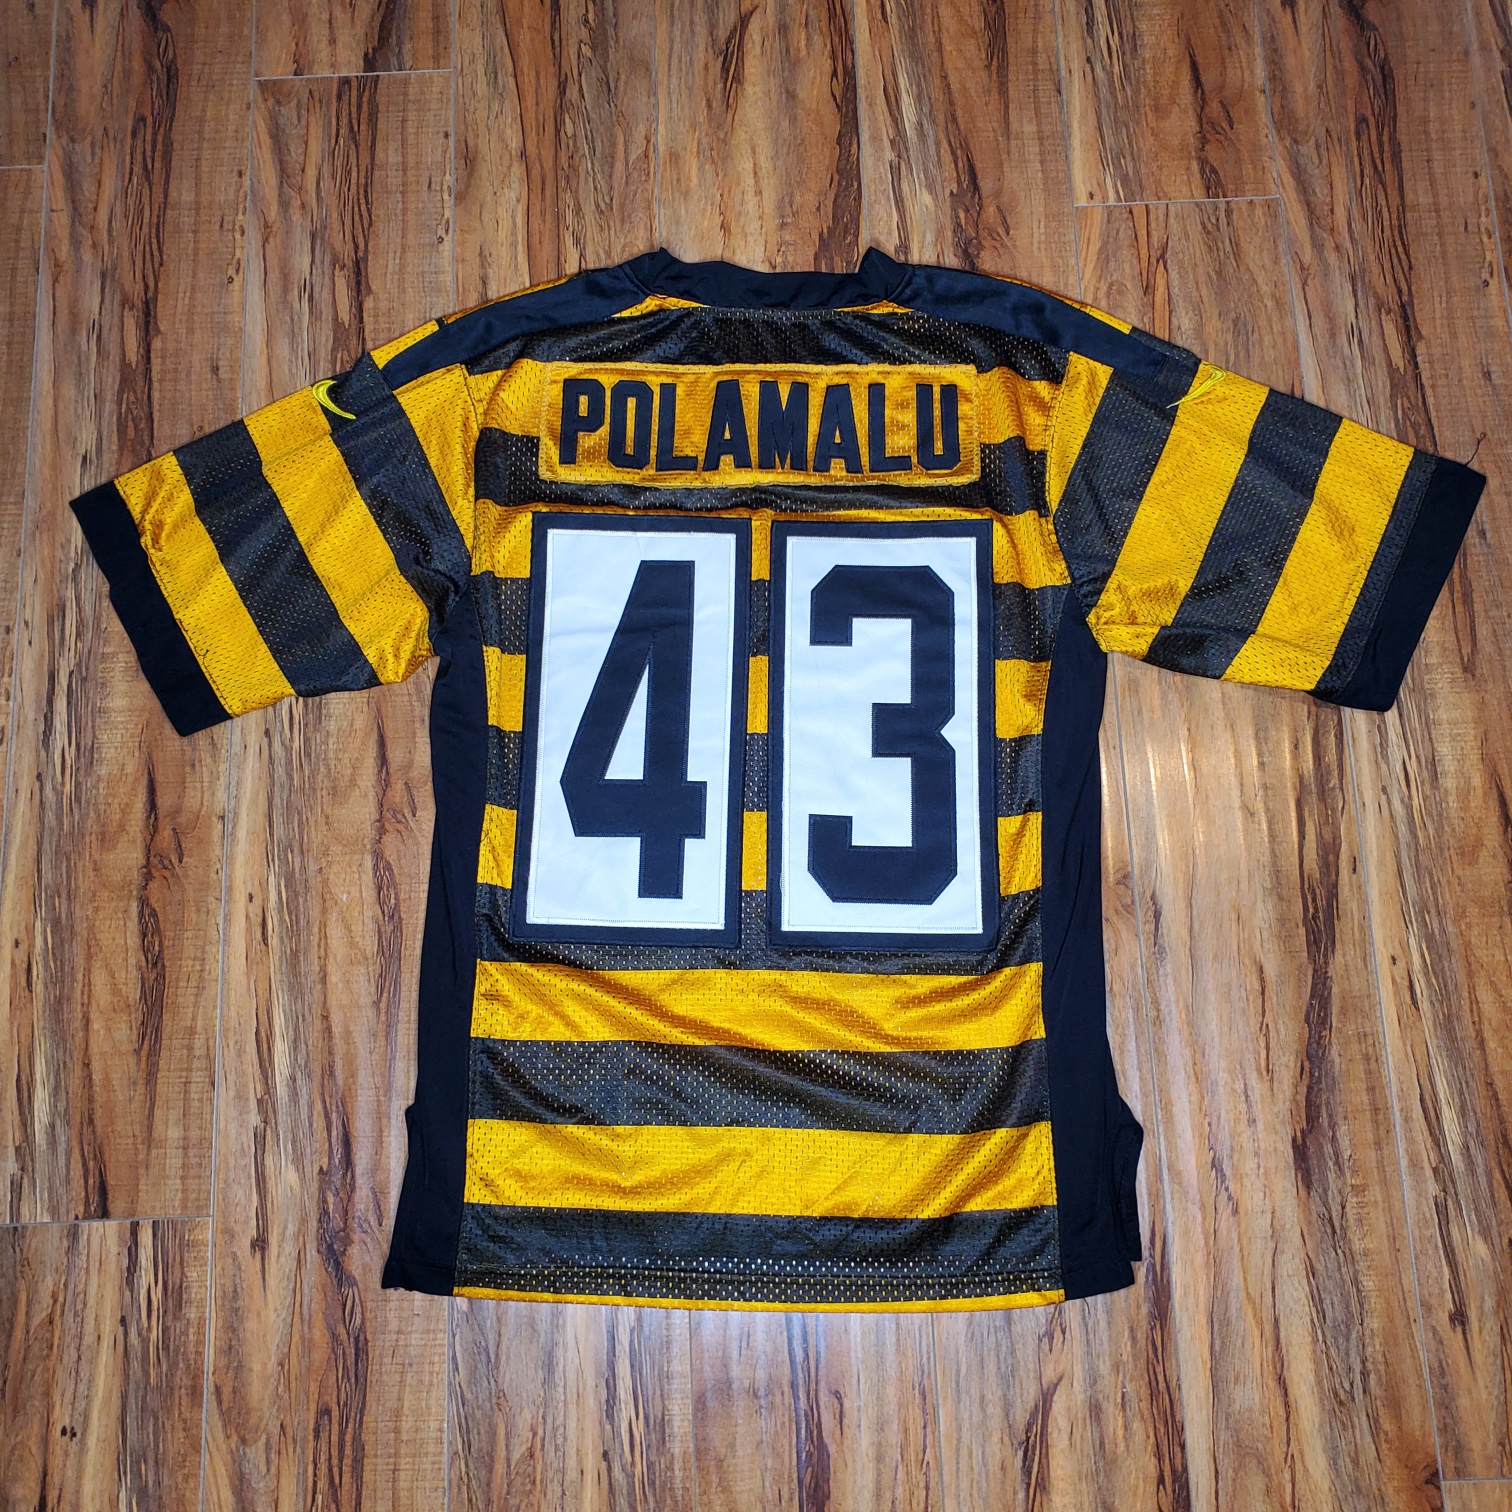 Troy Polamalu #43 Steelers Replica Nike Bumble Bee Jersey - Size 40, Men's Medium